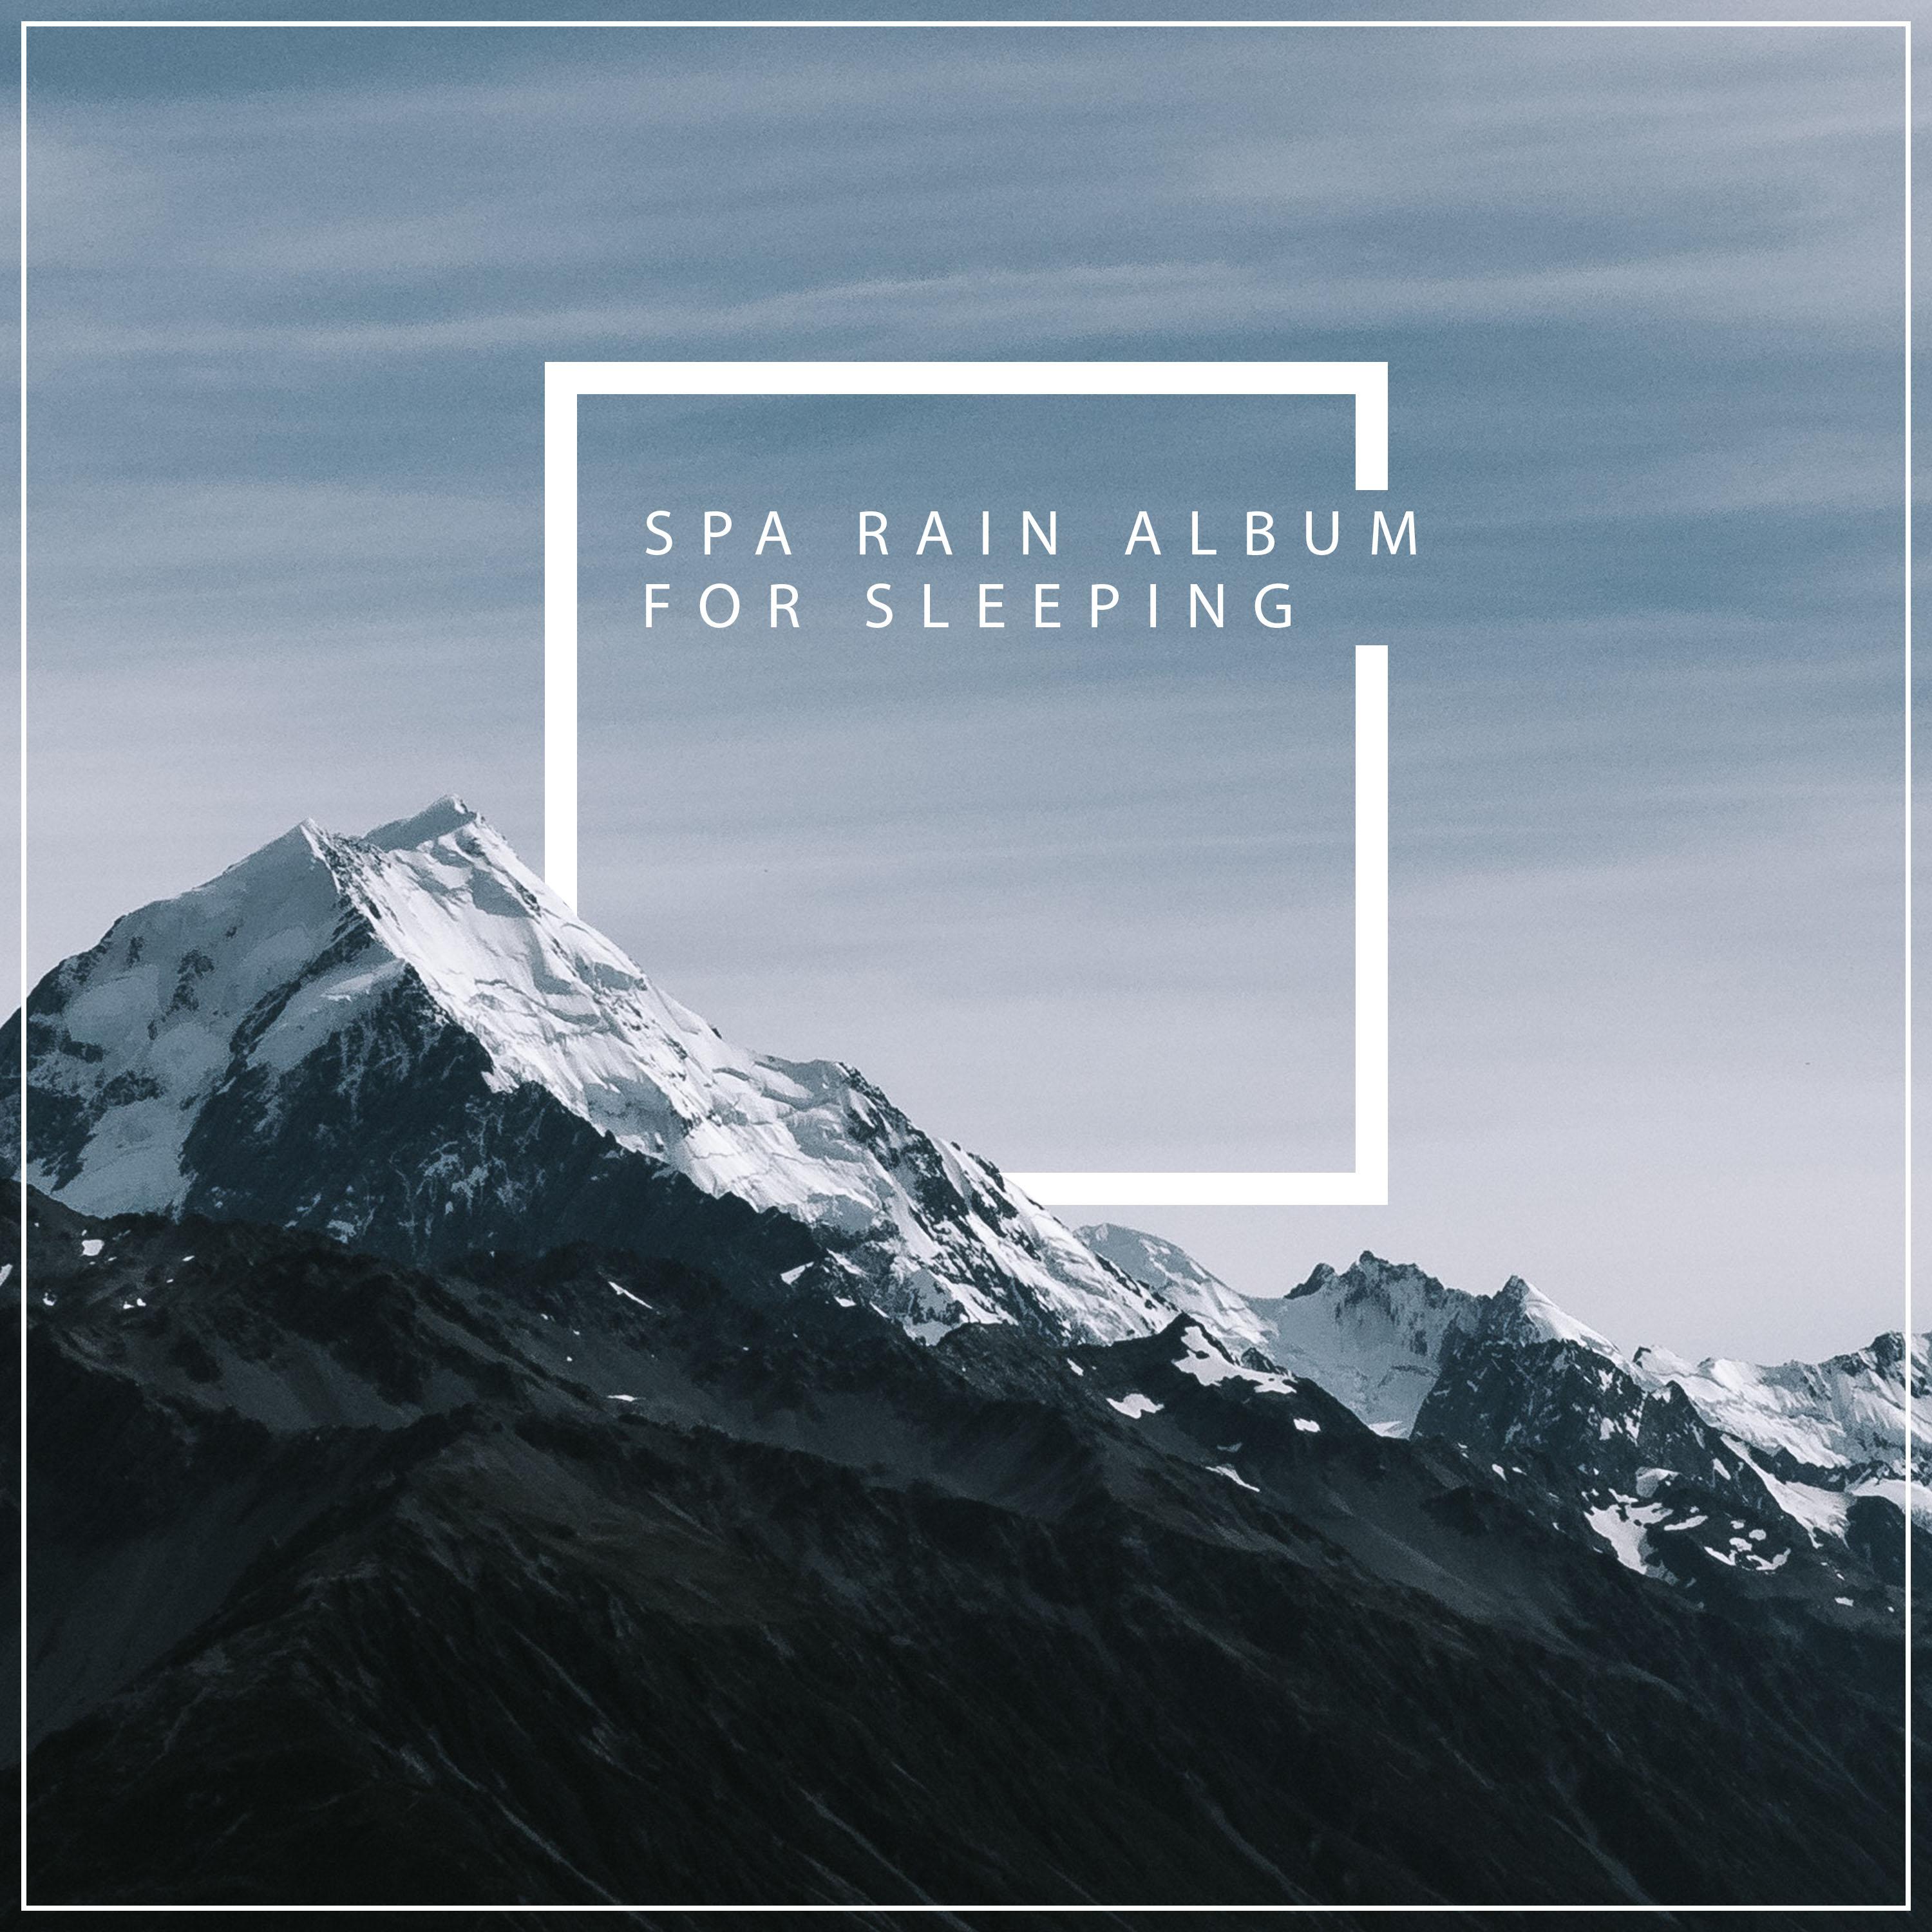 16 Spa Rain Album for Sleeping